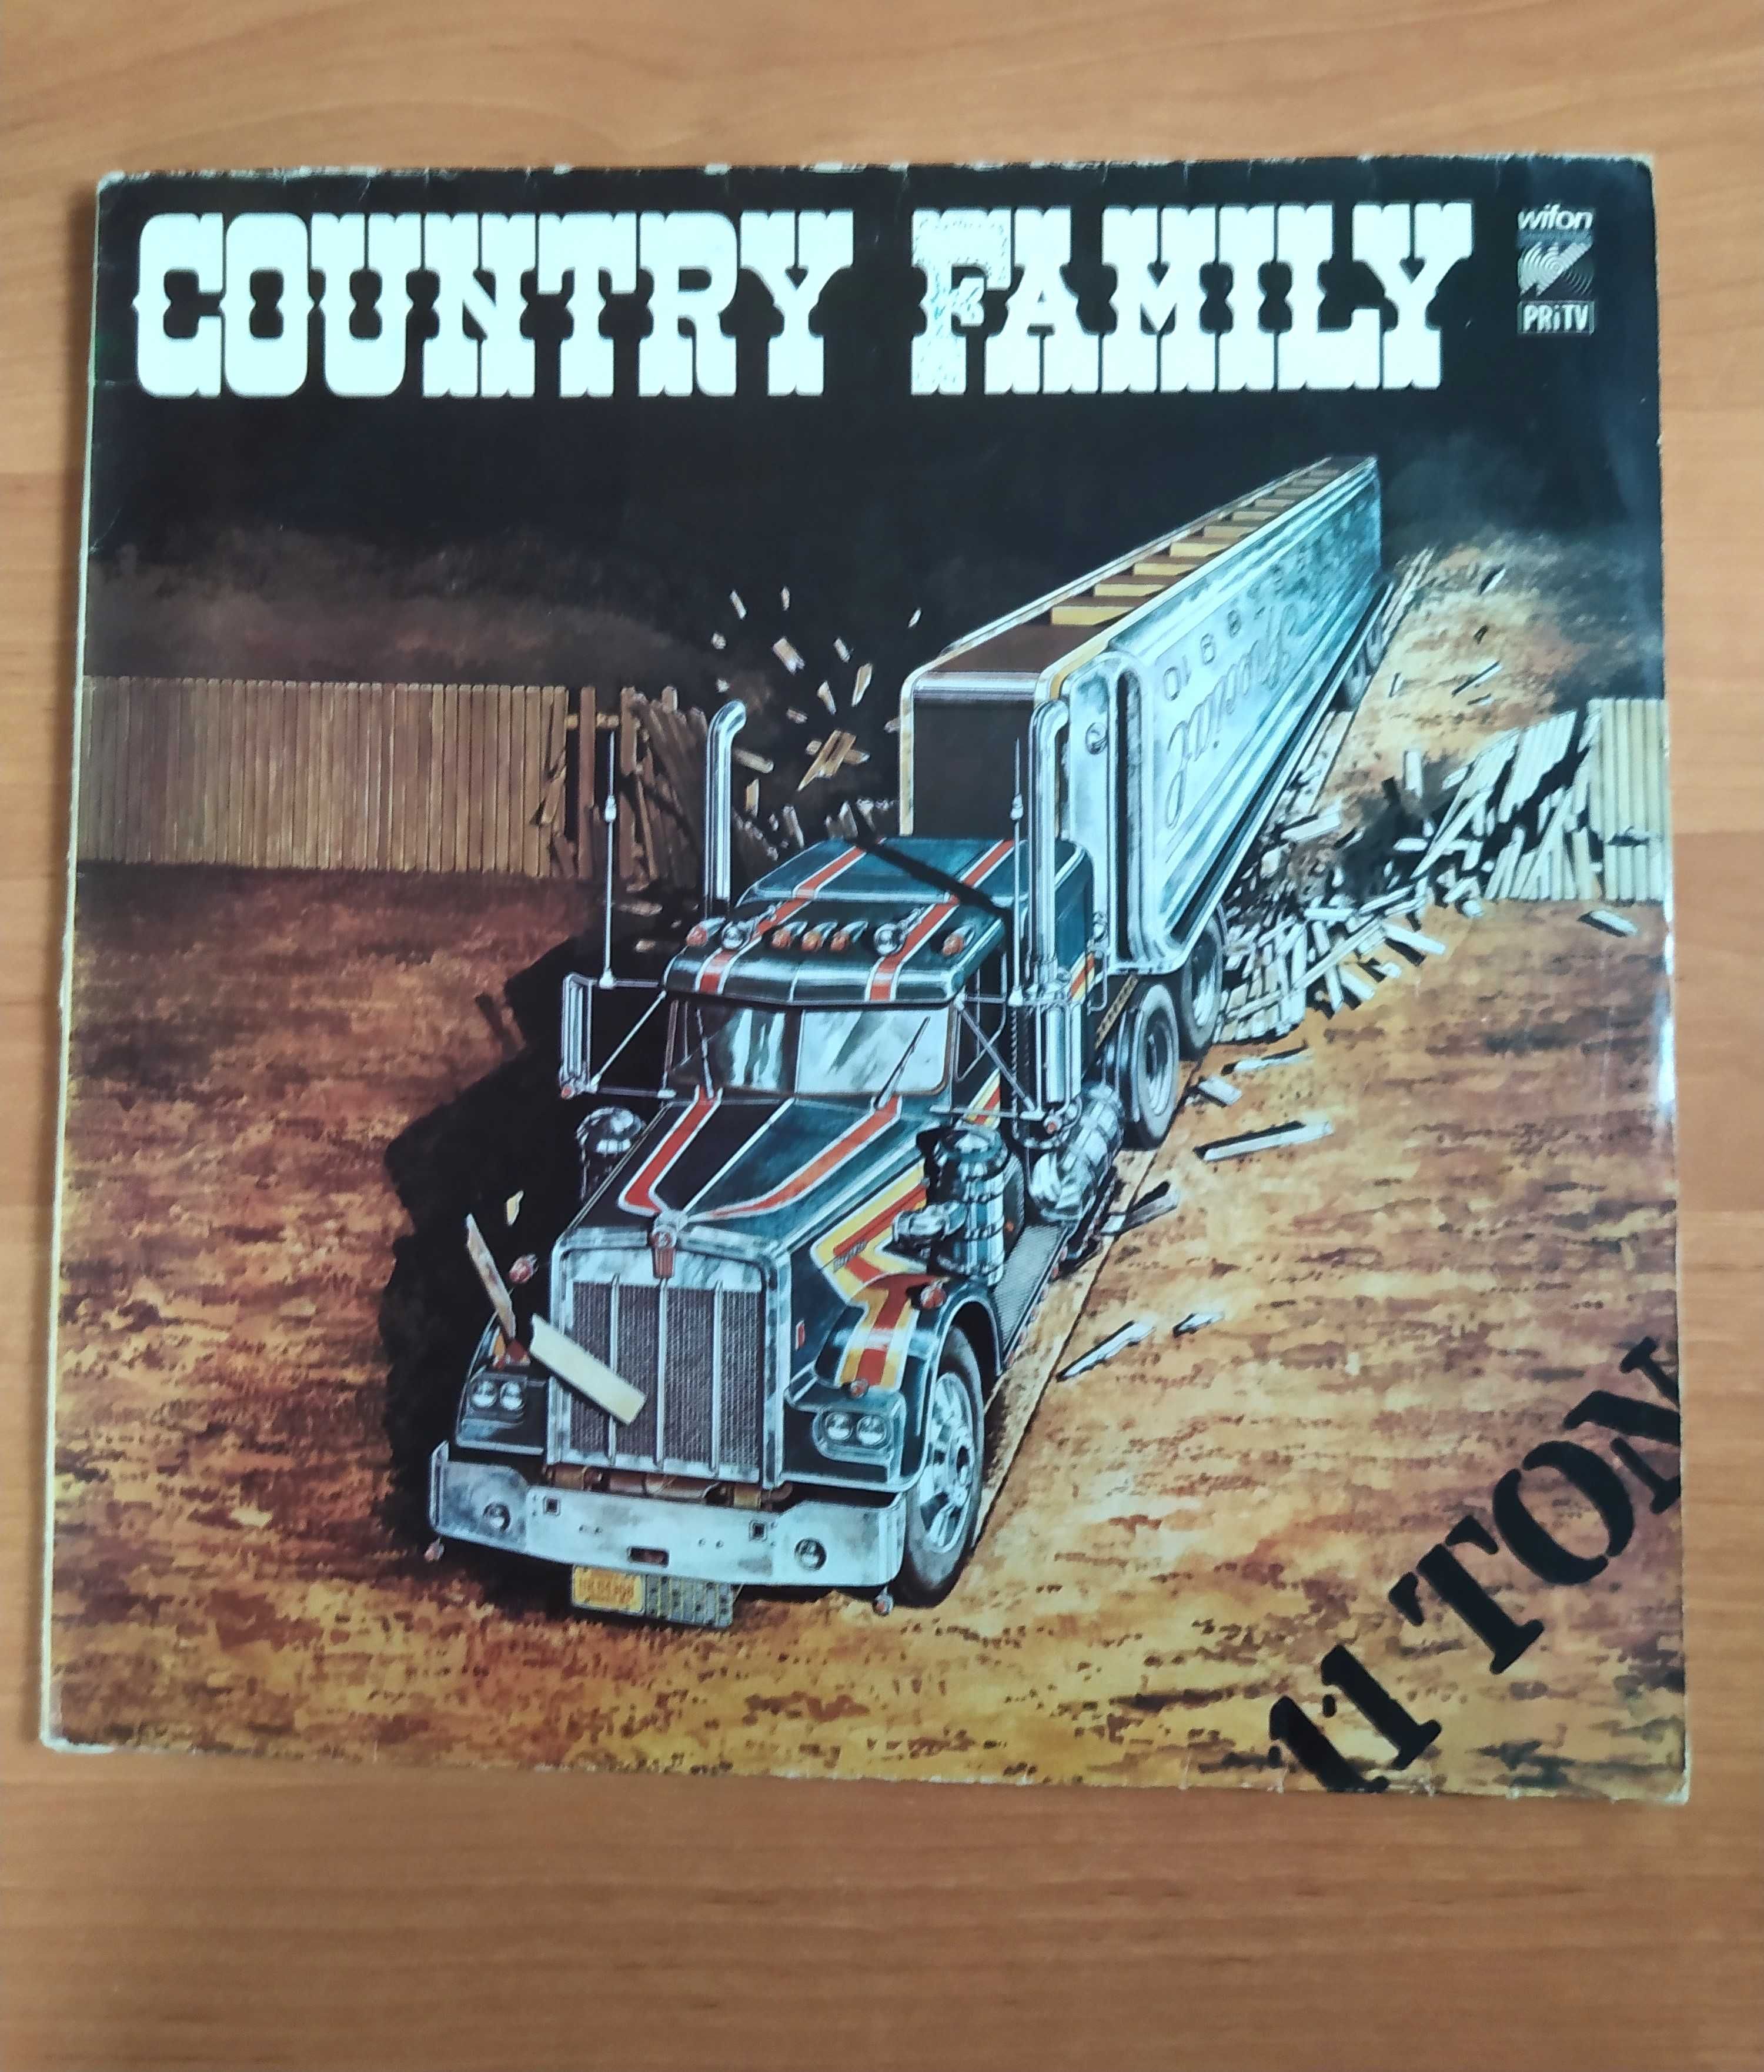 Winyl 11 Ton Country Family